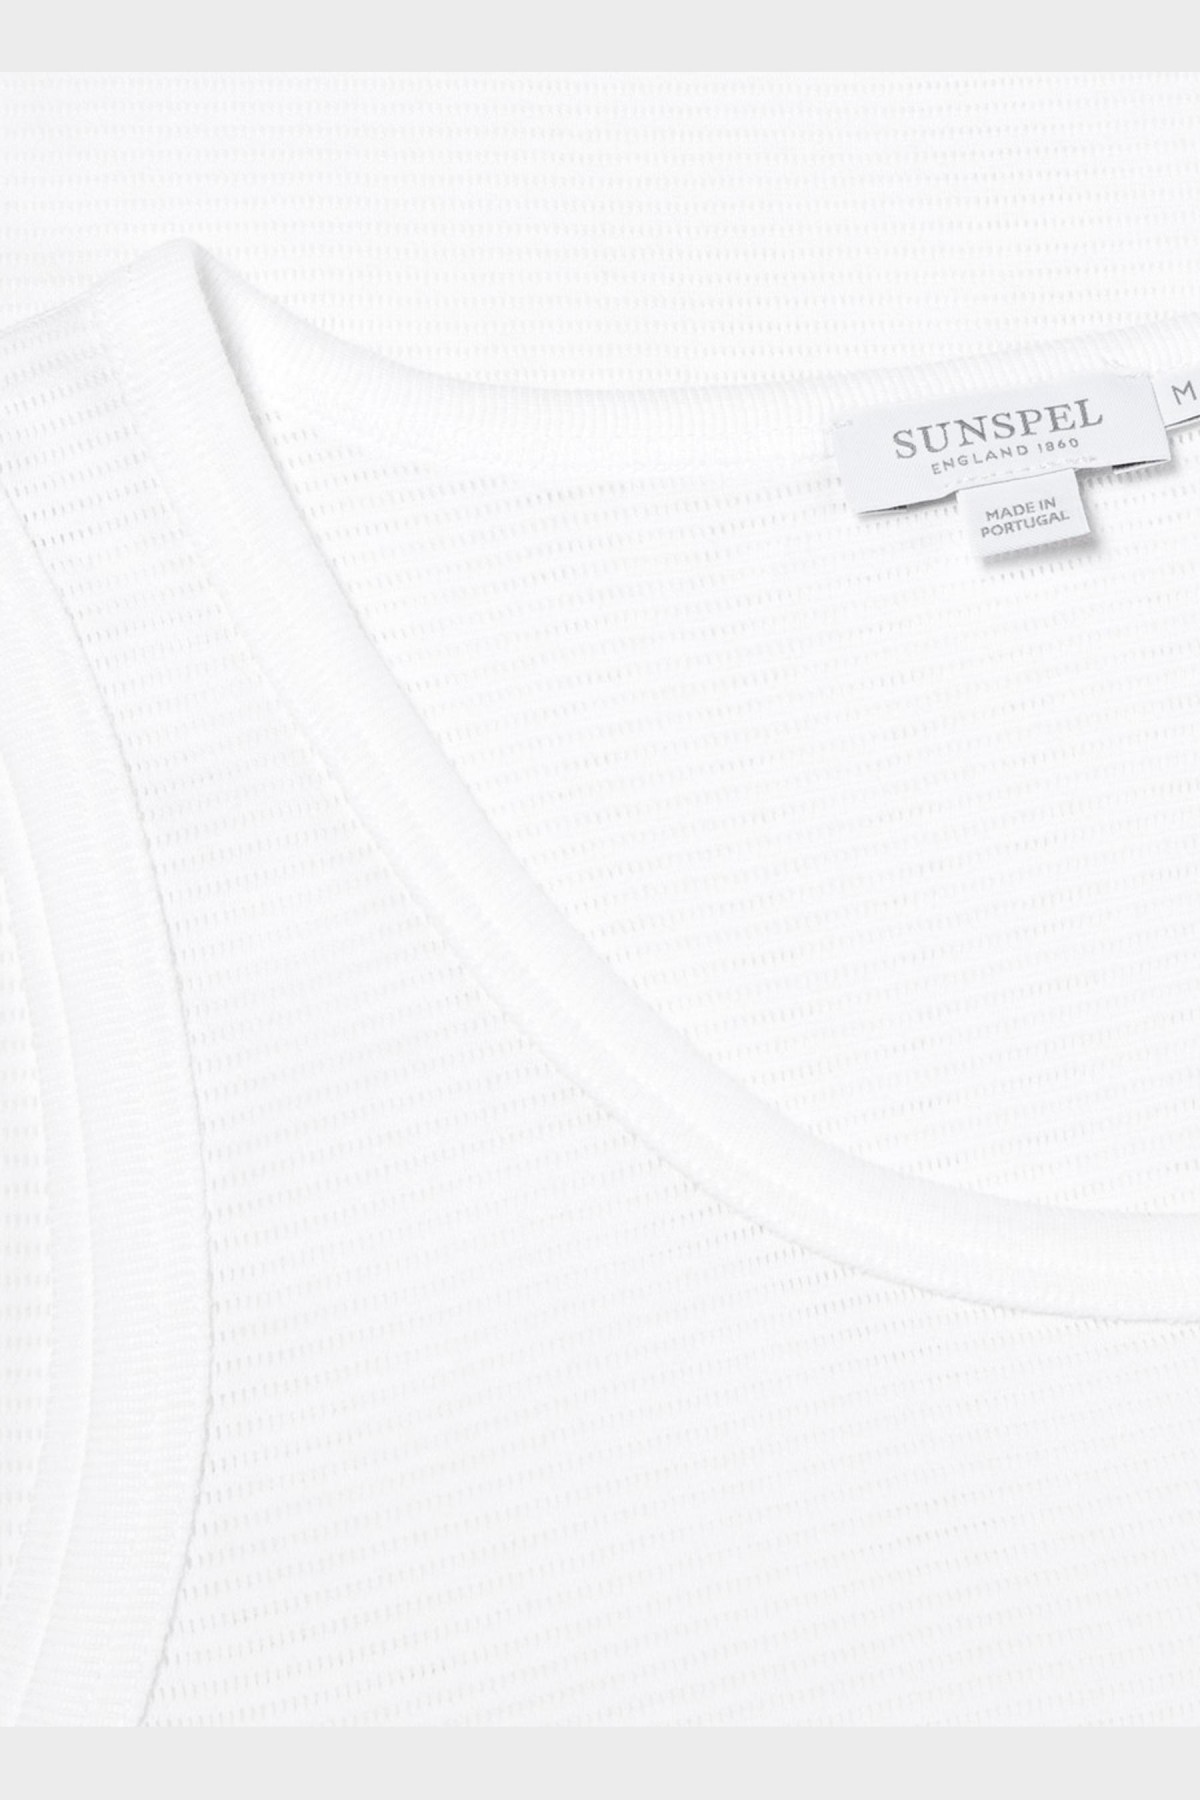 Sunspel Cellular Cotton Vest in White